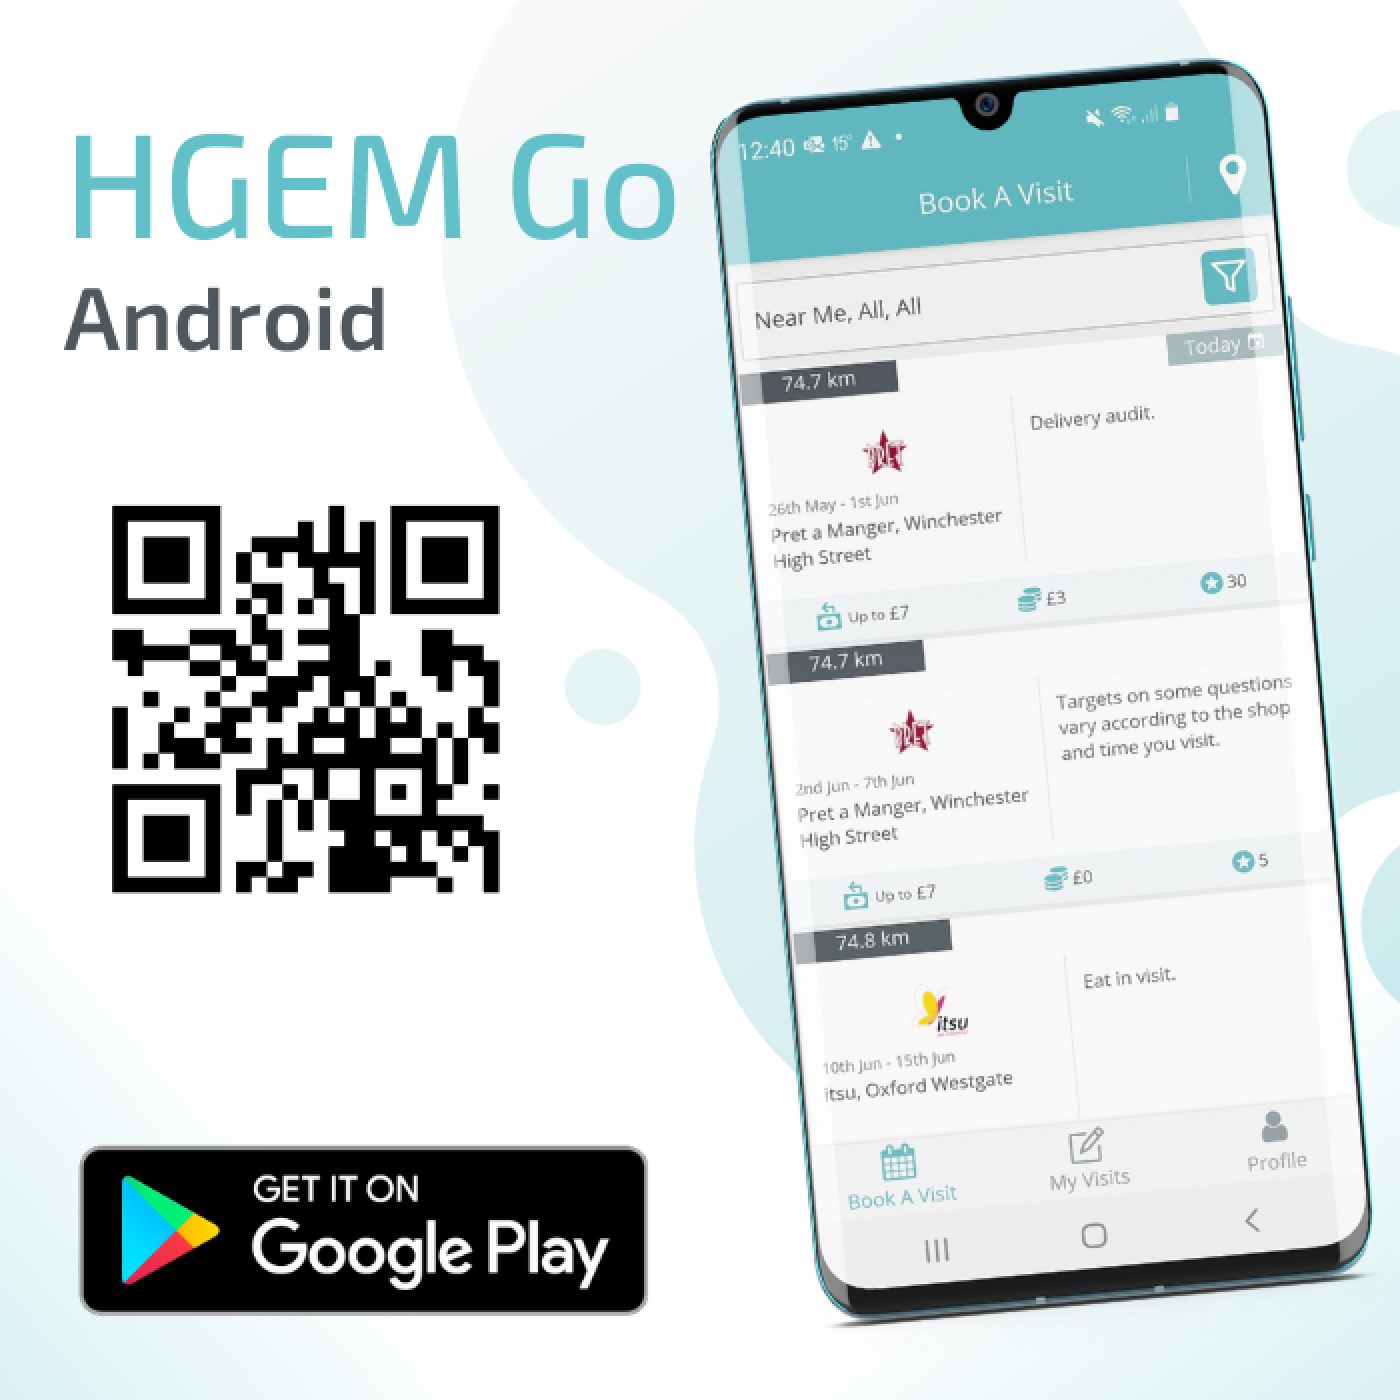 HGEM Go app